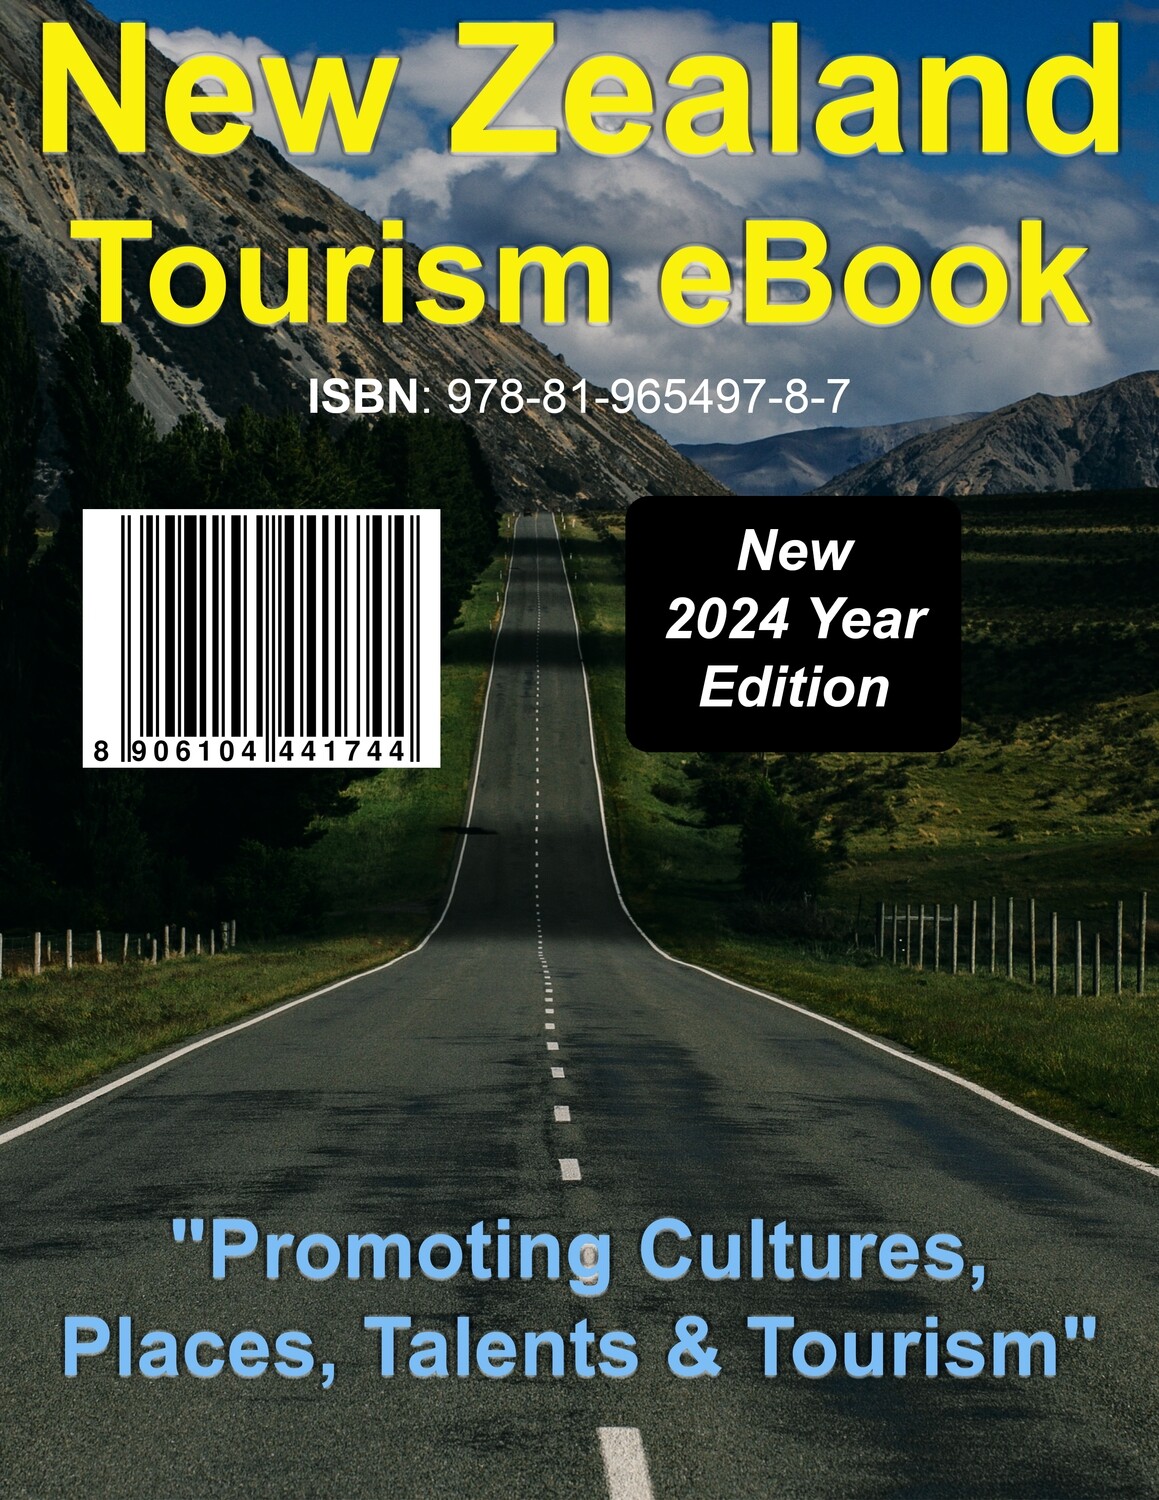 New Zealand Tourism eBook